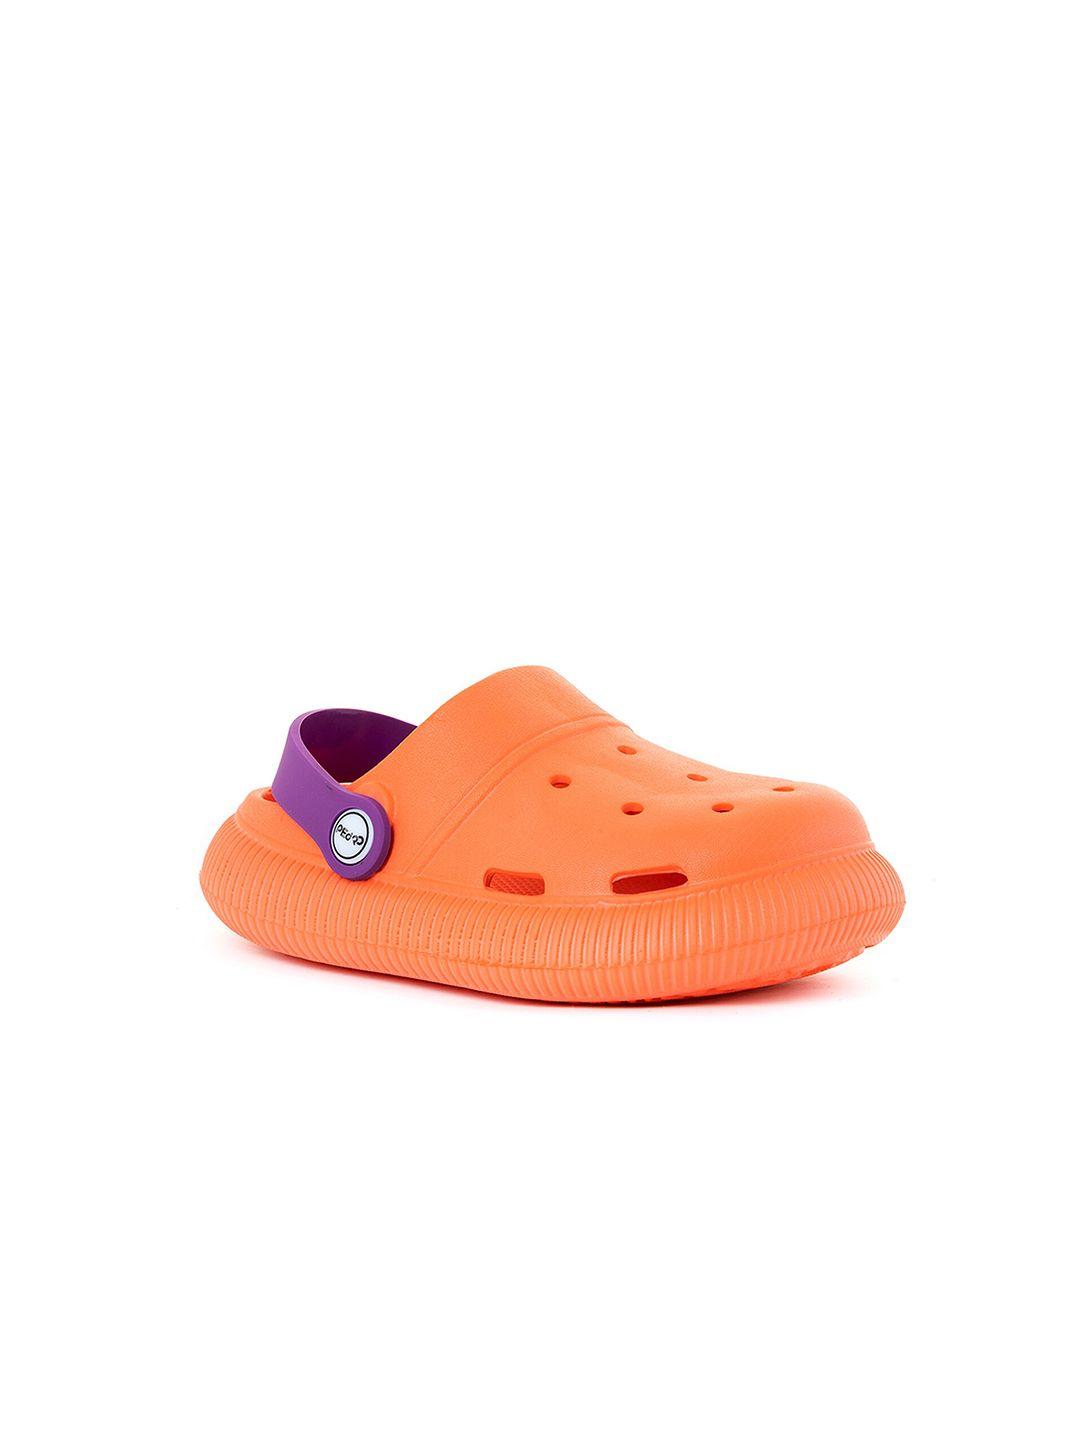 khadims-boys-orange-&-purple-clogs-sandals